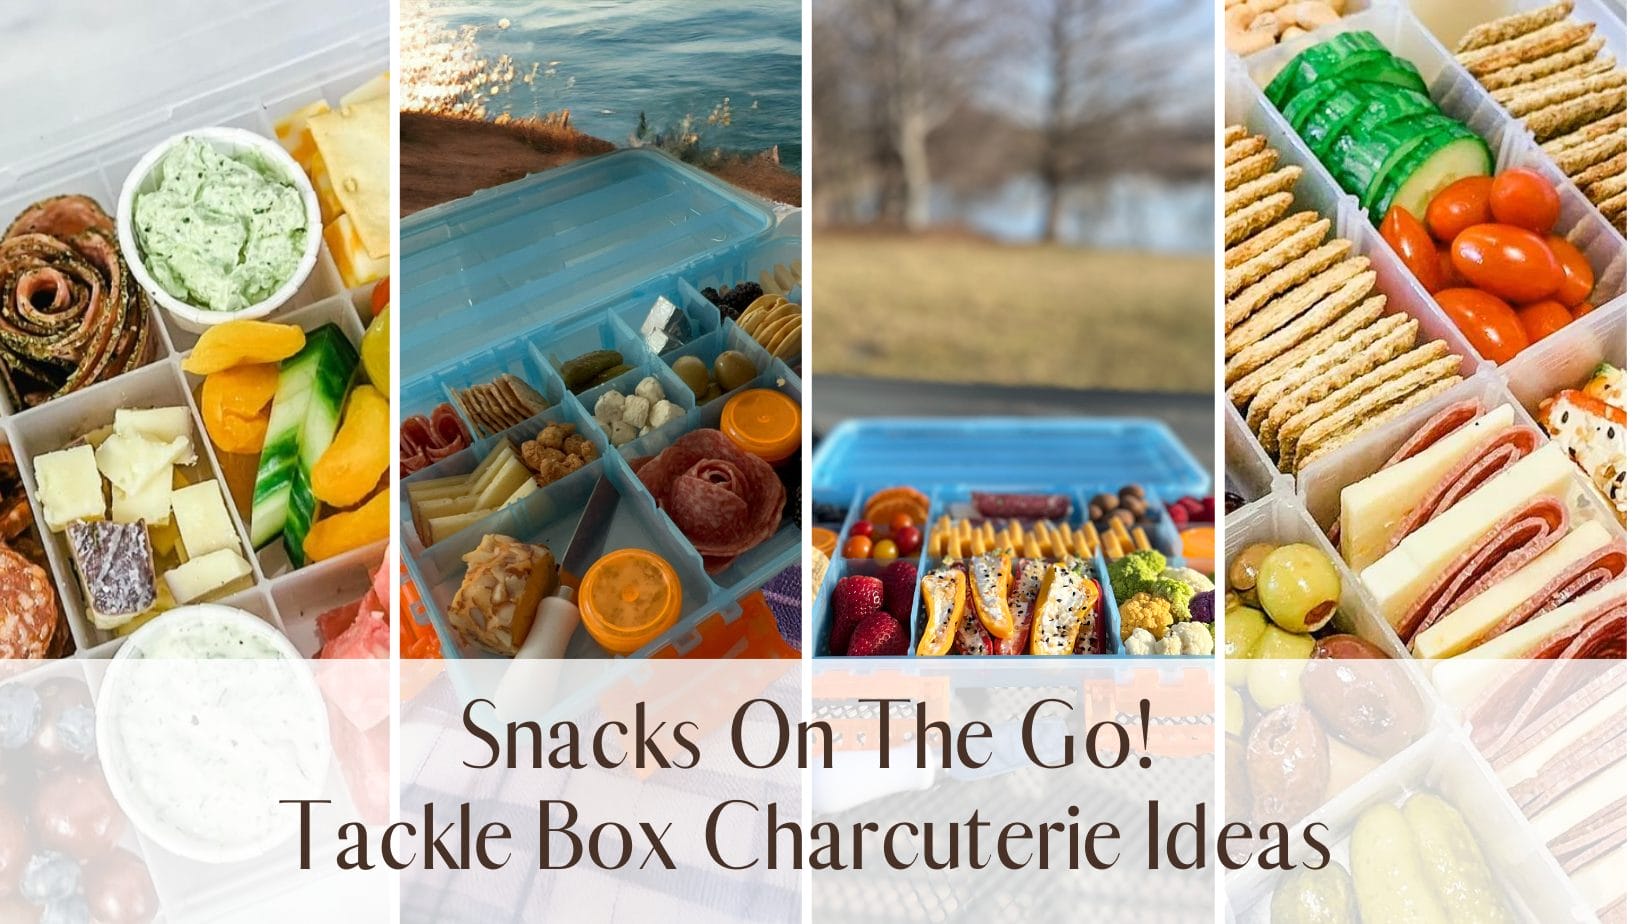 Snacks On The Go! Tackle Box Charcuterie Ideas - ICA